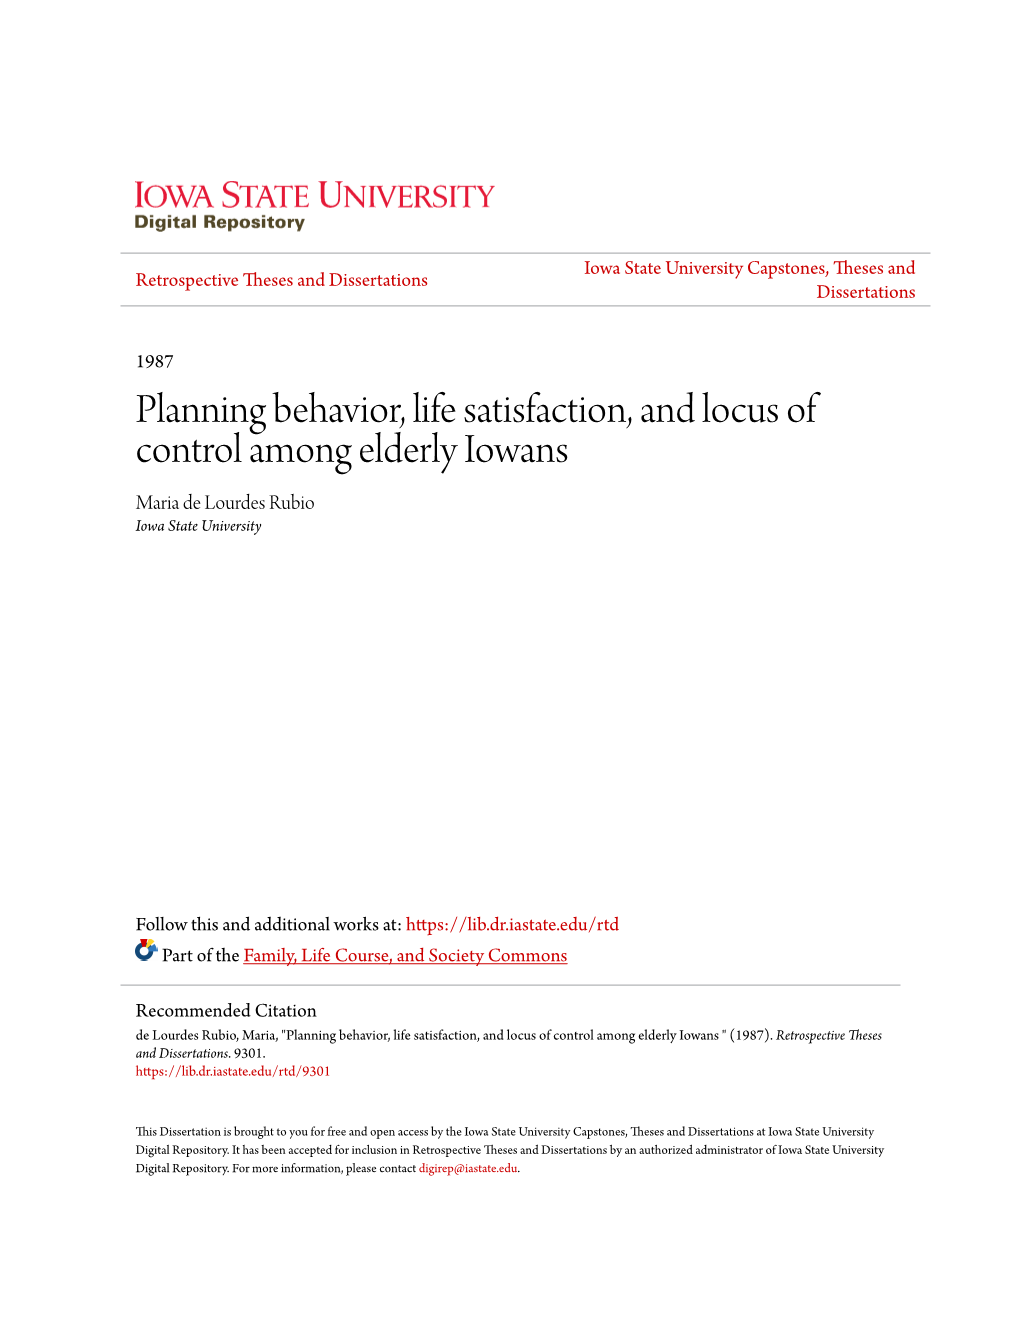 Planning Behavior, Life Satisfaction, and Locus of Control Among Elderly Iowans Maria De Lourdes Rubio Iowa State University